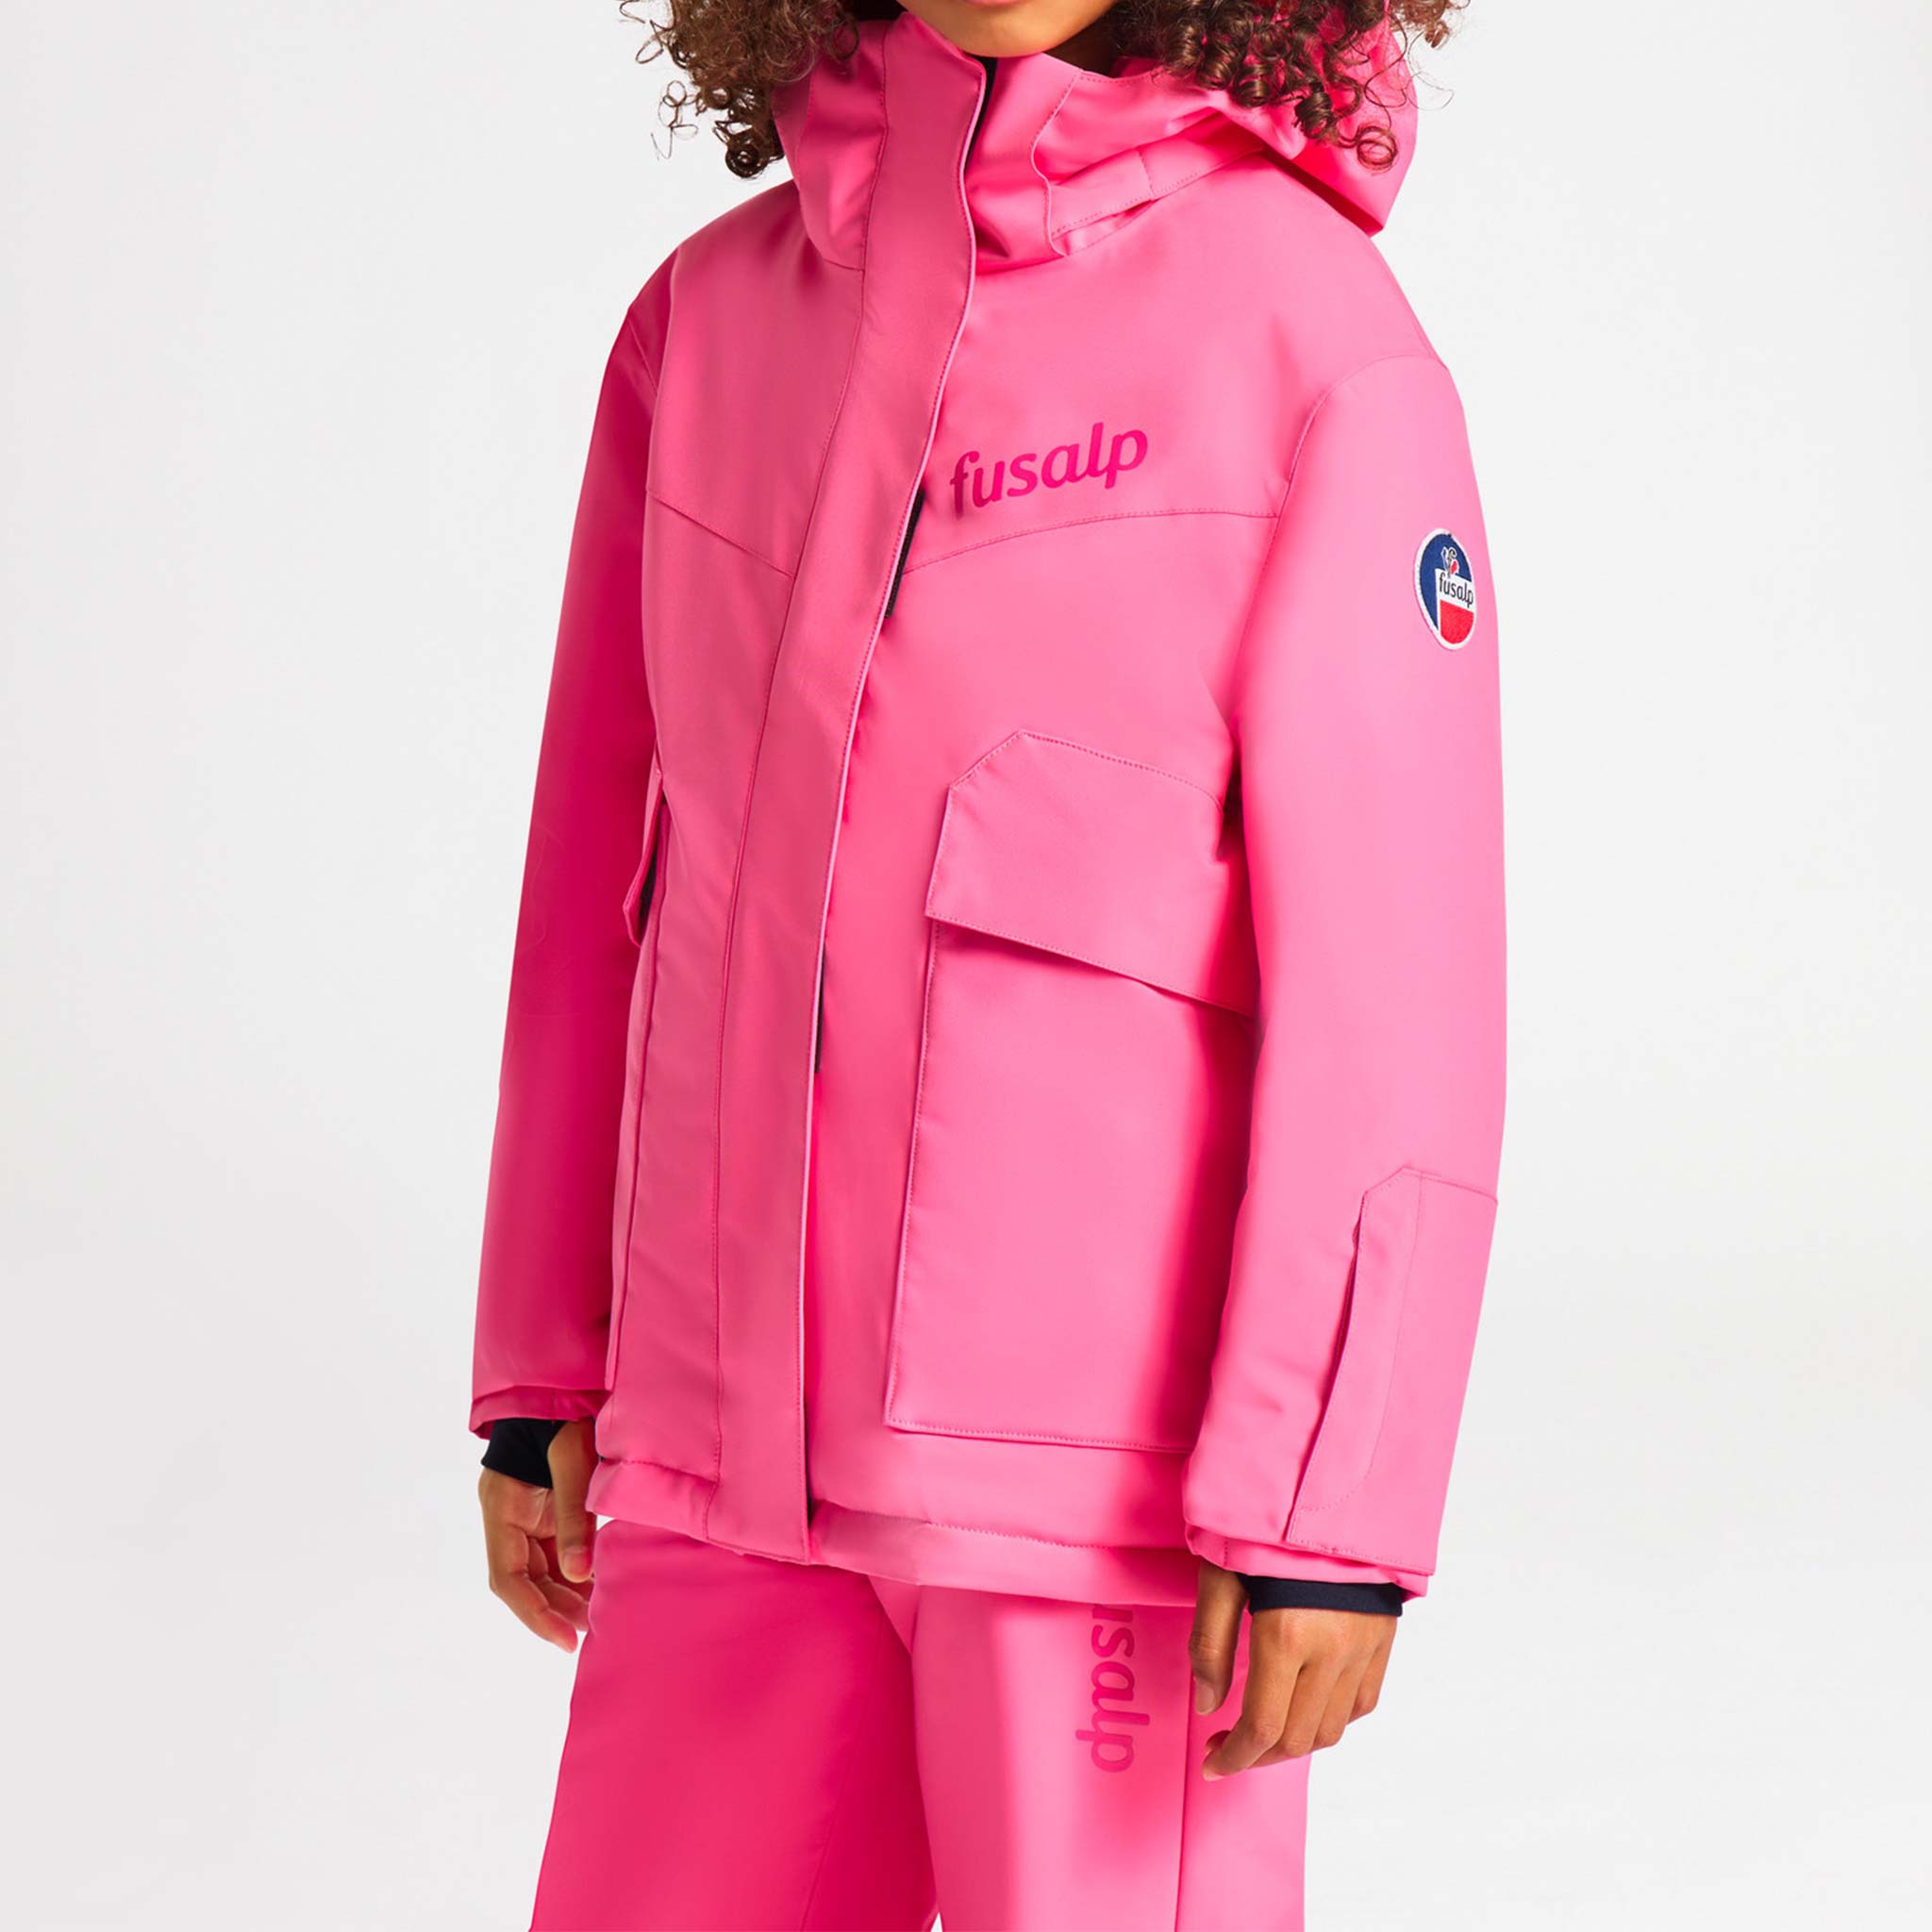 Neptune Kids Jacket in Pop Pink